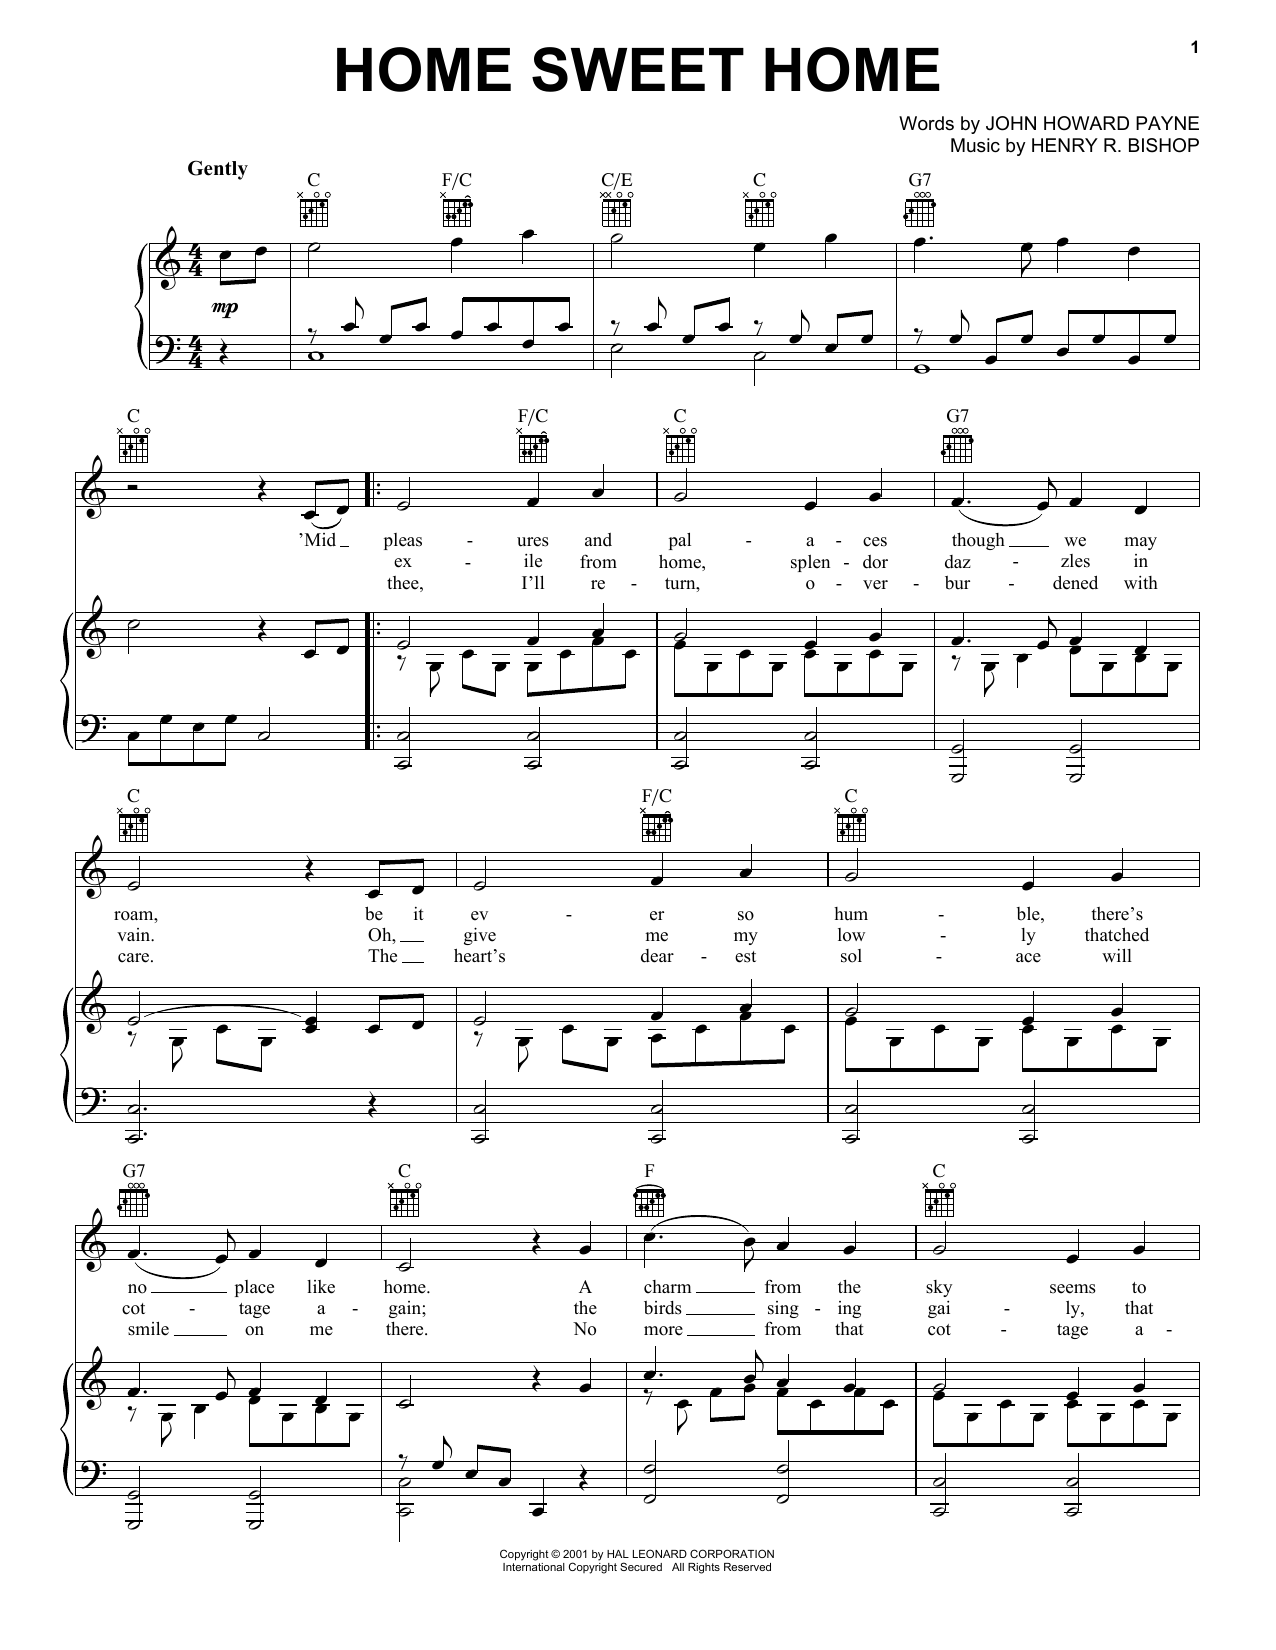 John Howard Payne Home Sweet Home sheet music notes printable PDF score